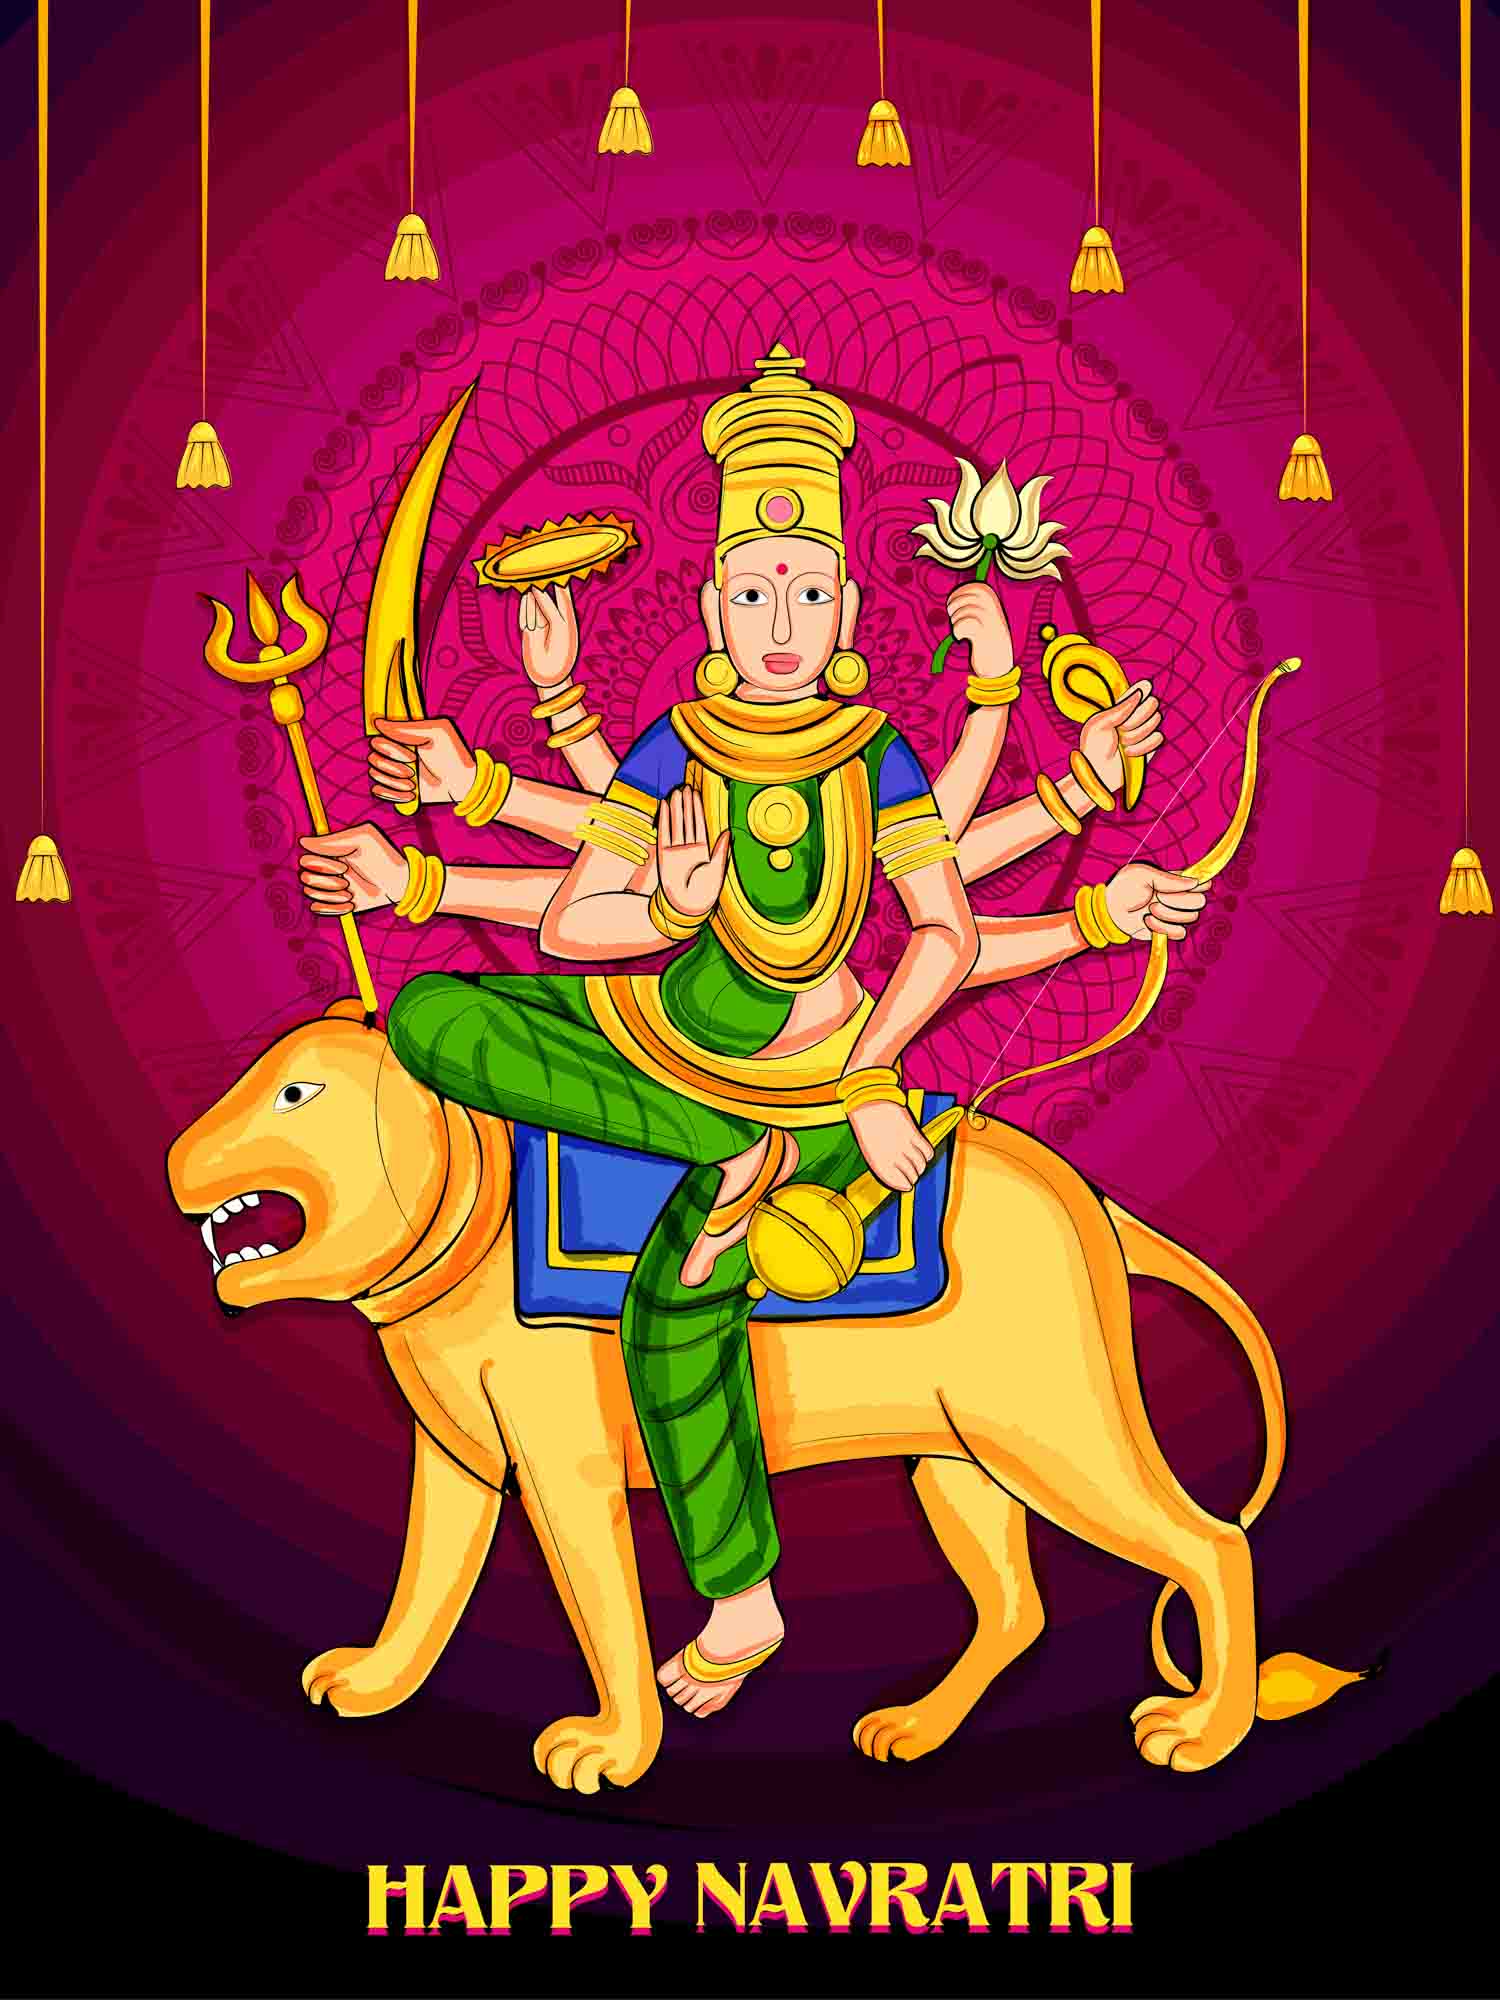 Vector design of Goddess Durga for Happy Navratri Dussehra festival of India